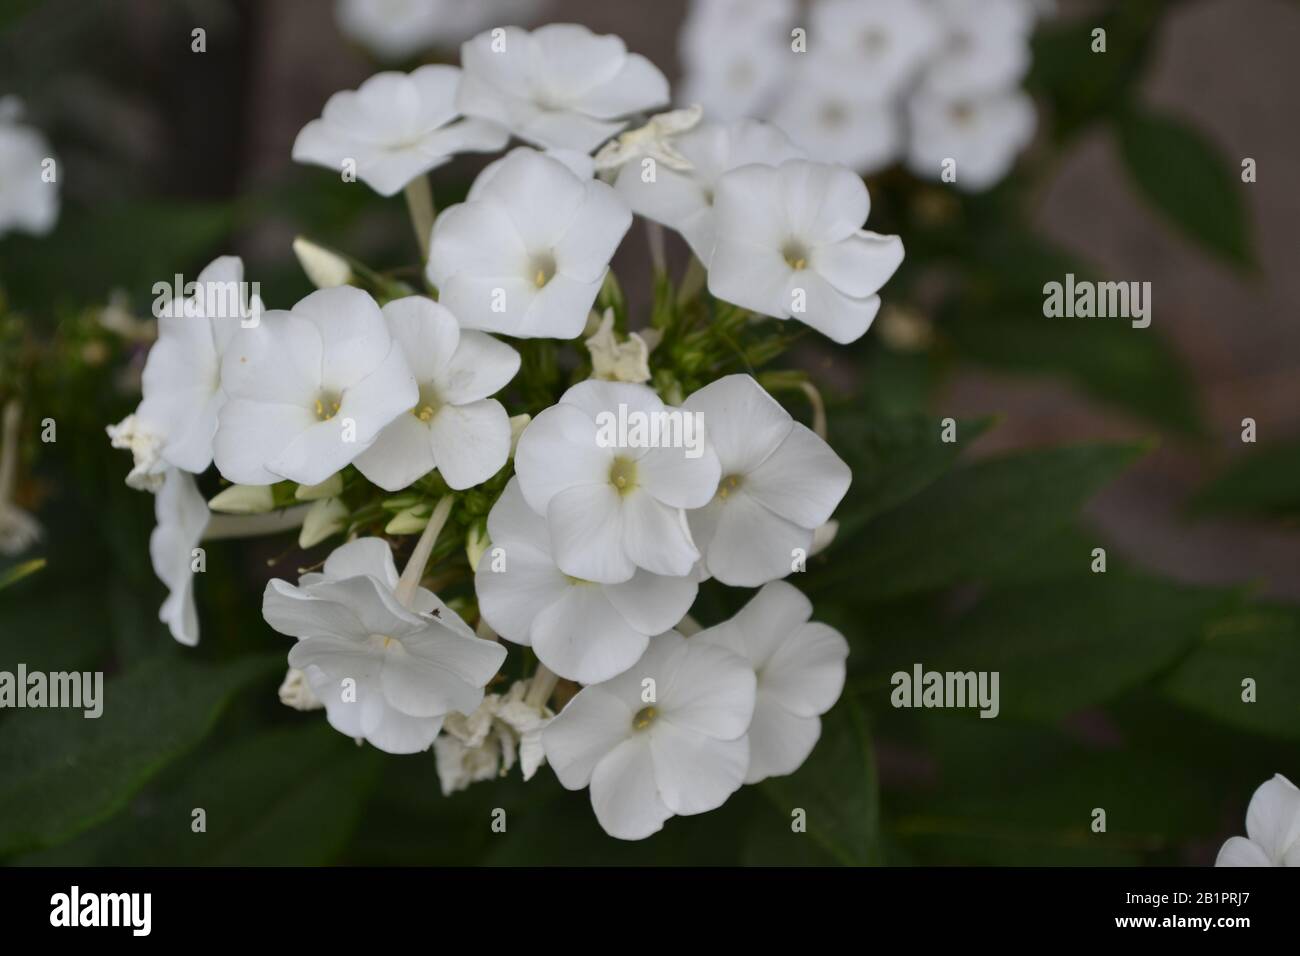 Phlox. Polemoniaceae. Growing flowers. Flowerbed. Garden. Floriculture. White inflorescences. Beautiful flowers. Green leaves. Horizontal photo Stock Photo